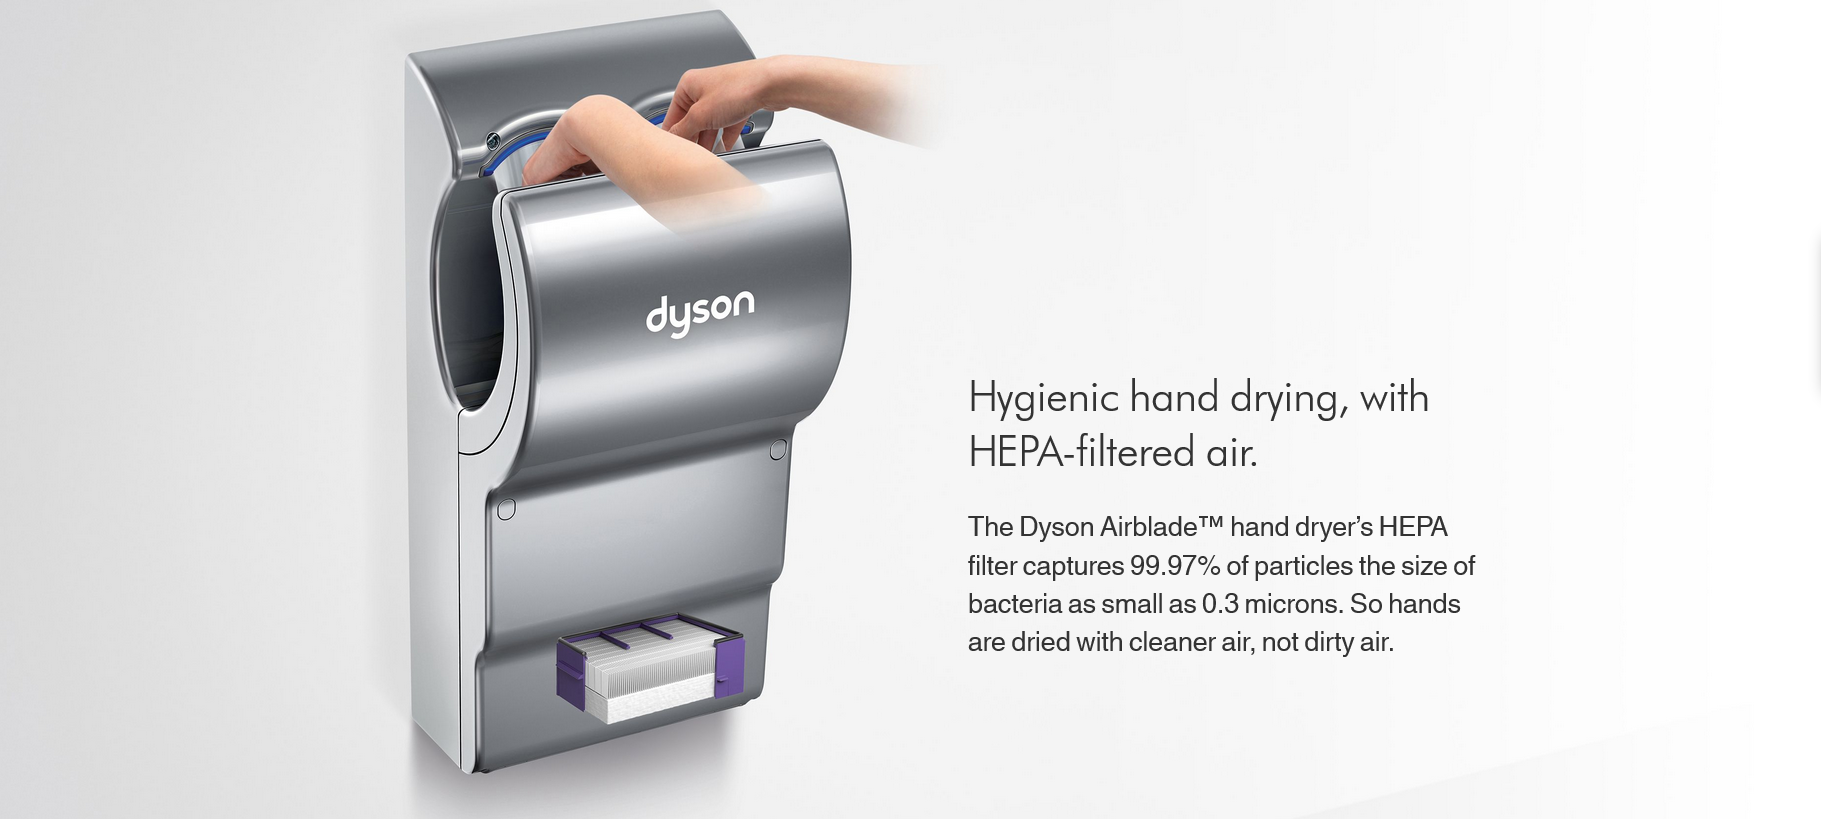 Dyson Airblade dB Hand Dryer Hygienic Information